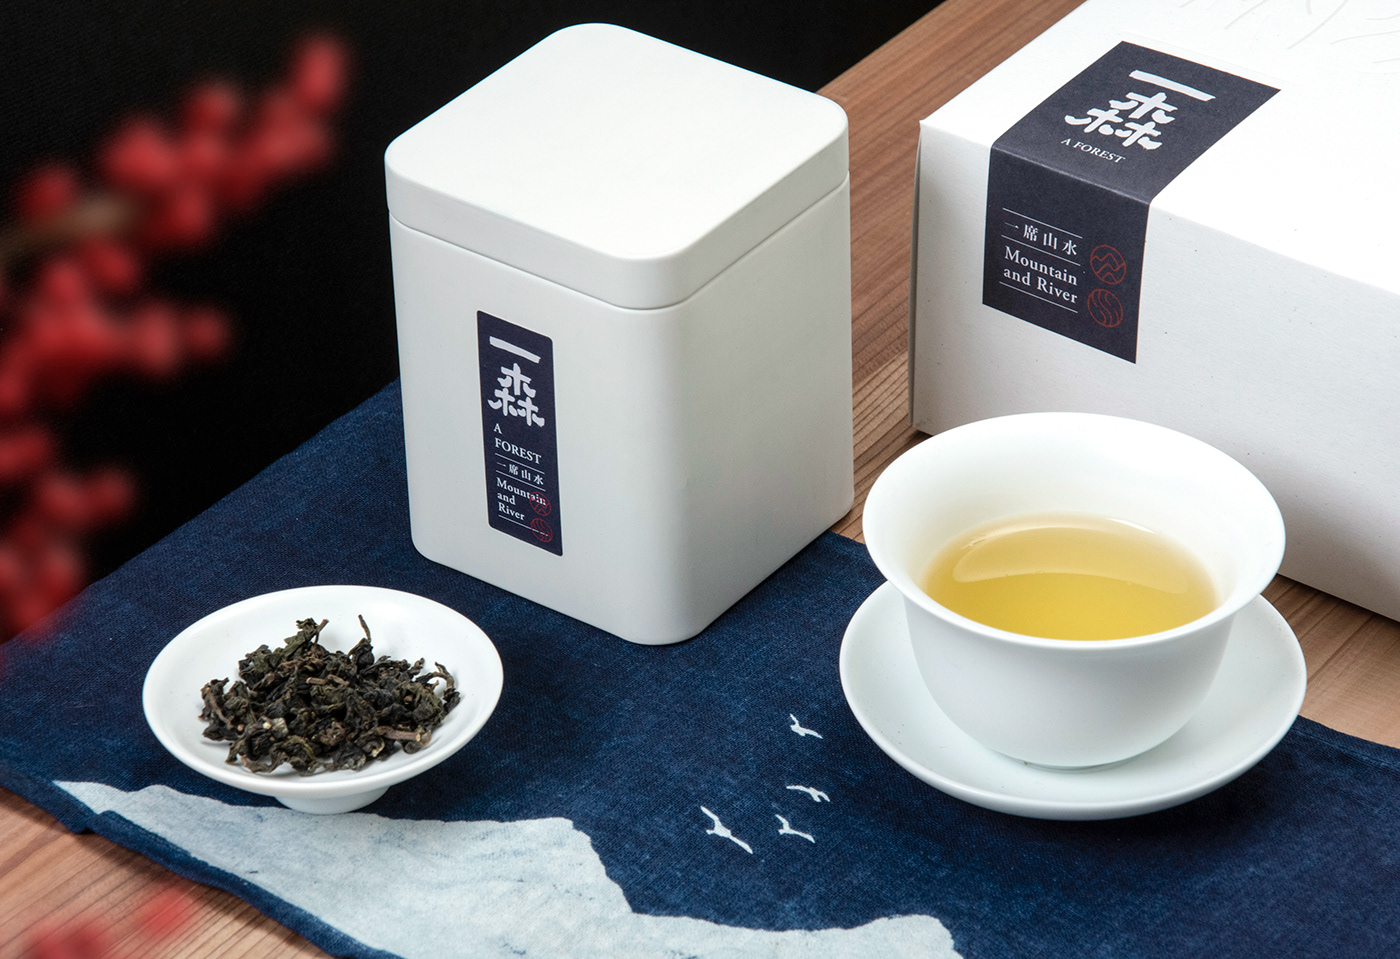 Chinese Tea forest Indigo indigo dye Packaging packaging design tea